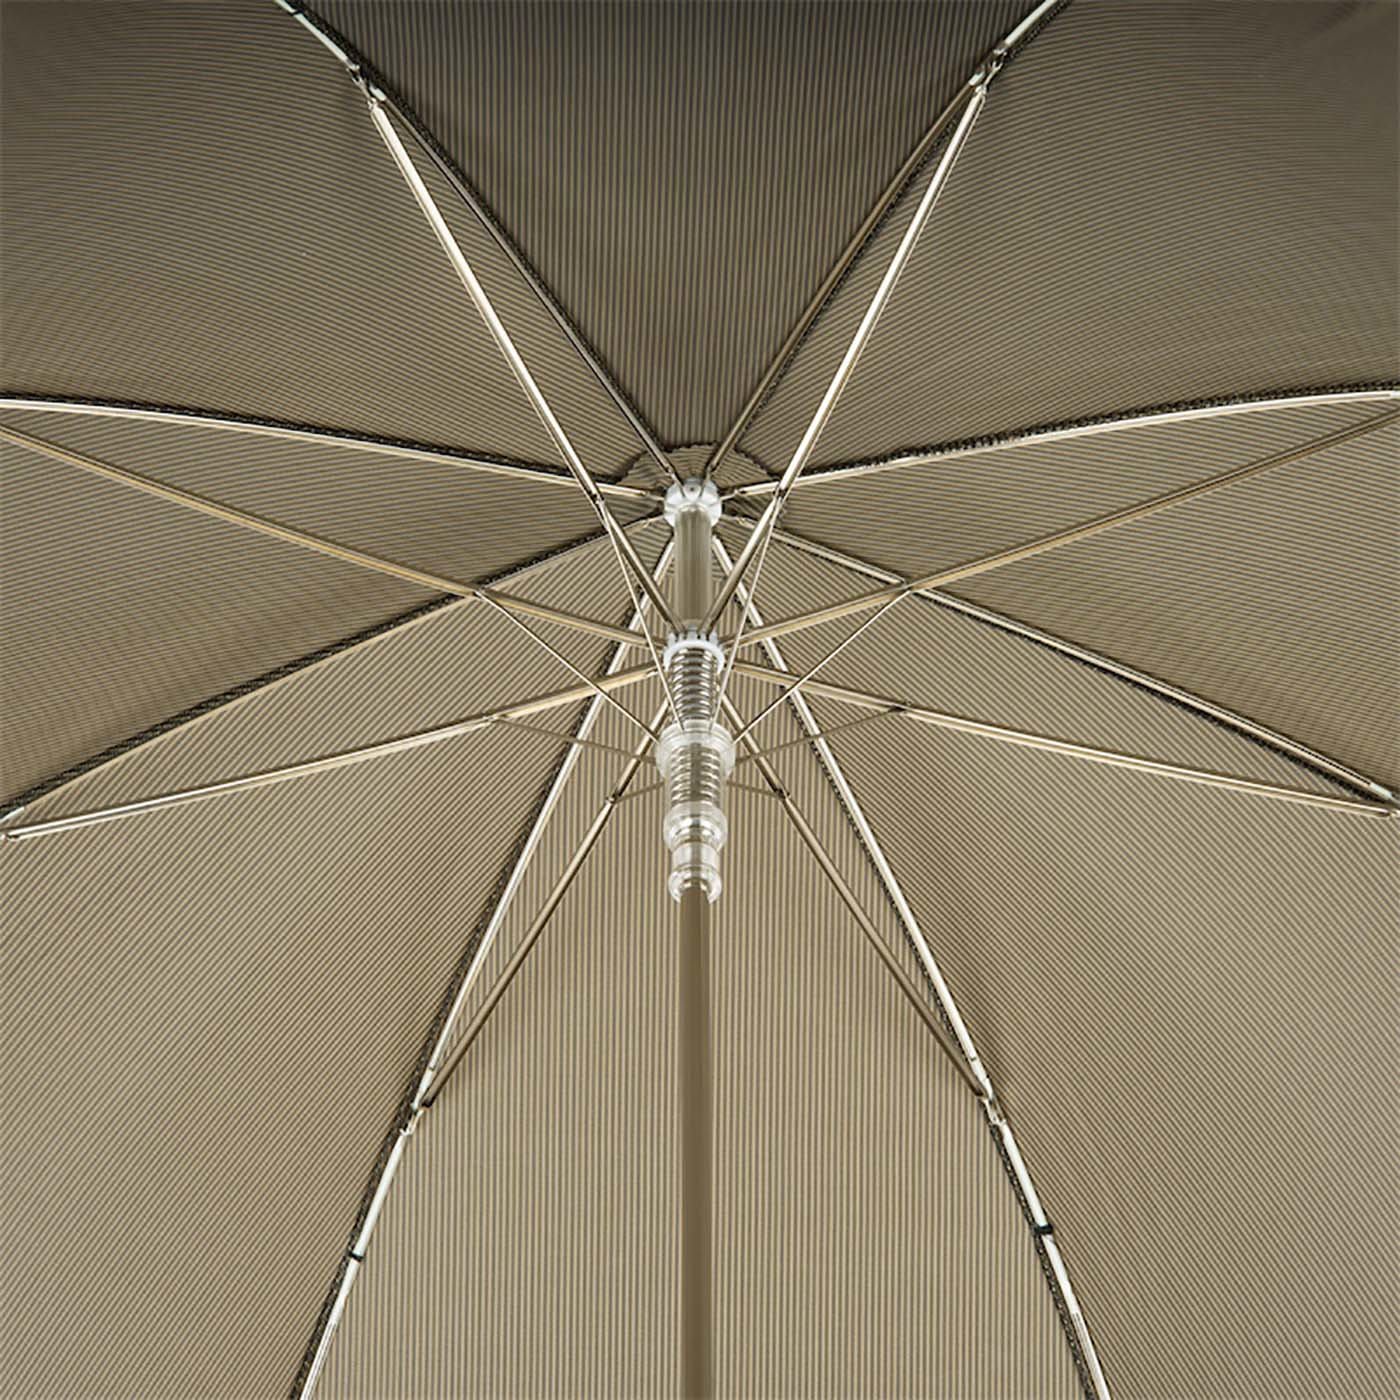 Beige Umbrella with Silver Eagle Handle - Pasotti